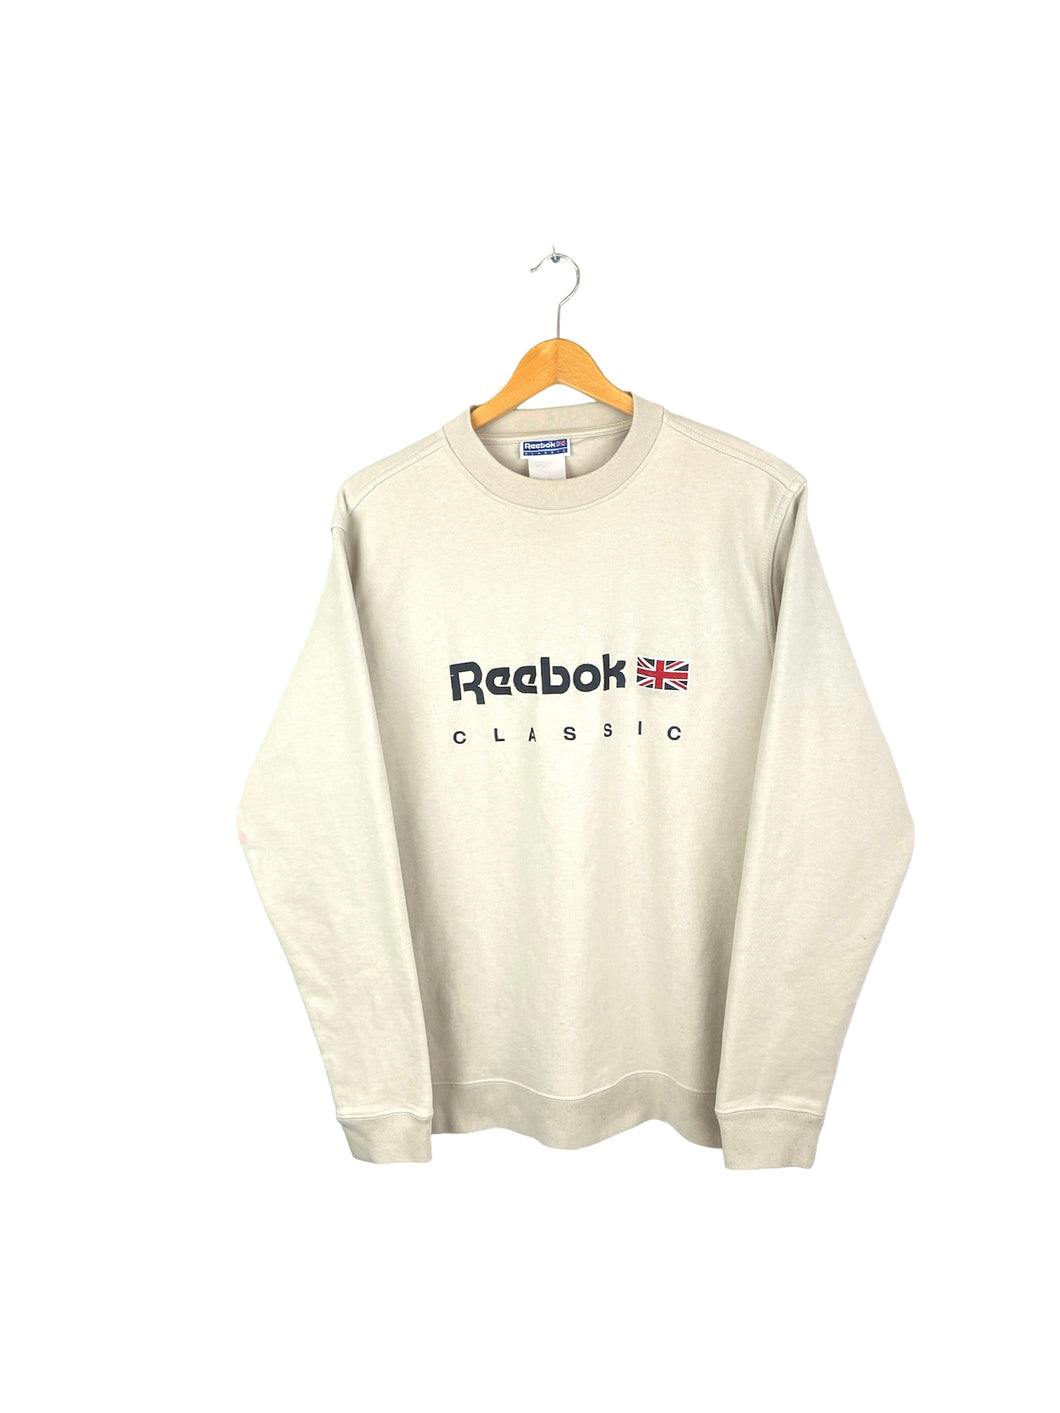 Reebok Sweatshirt - Large